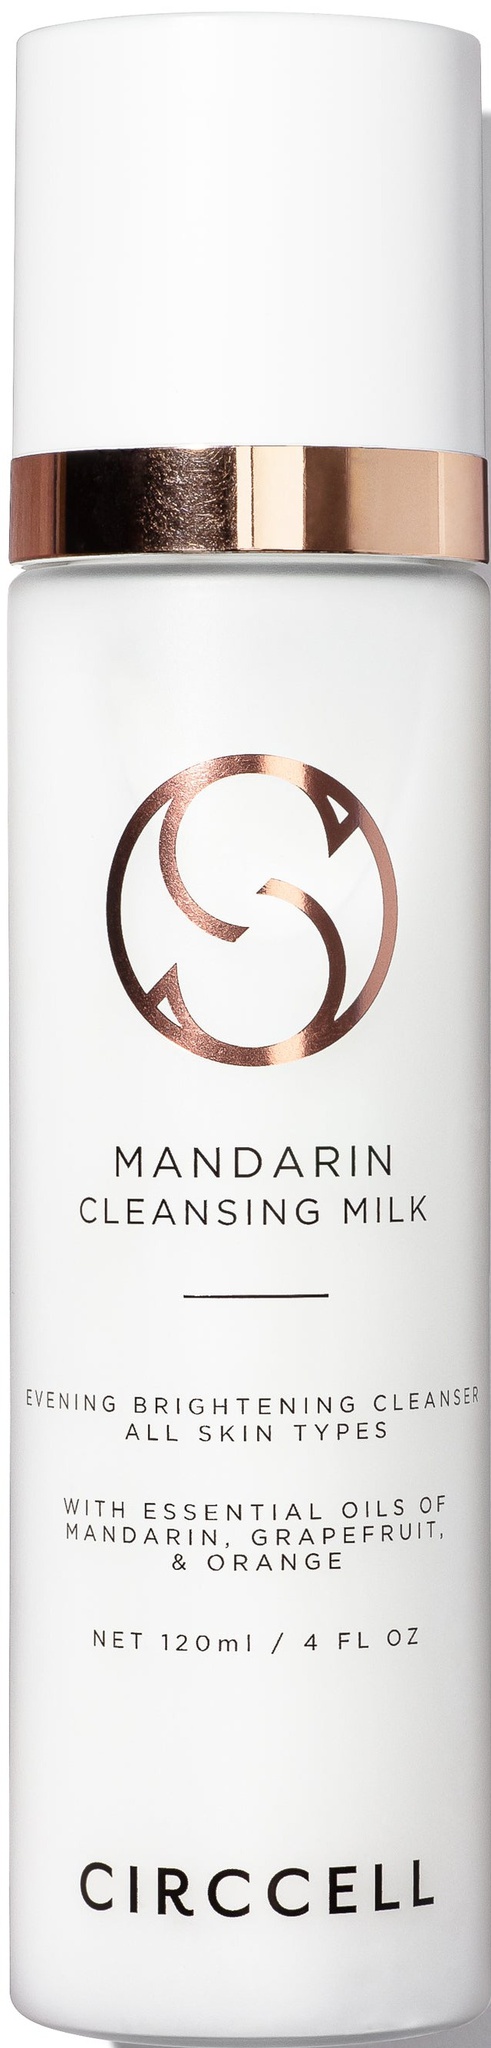 Circcell Mandarin Cleansing Milk